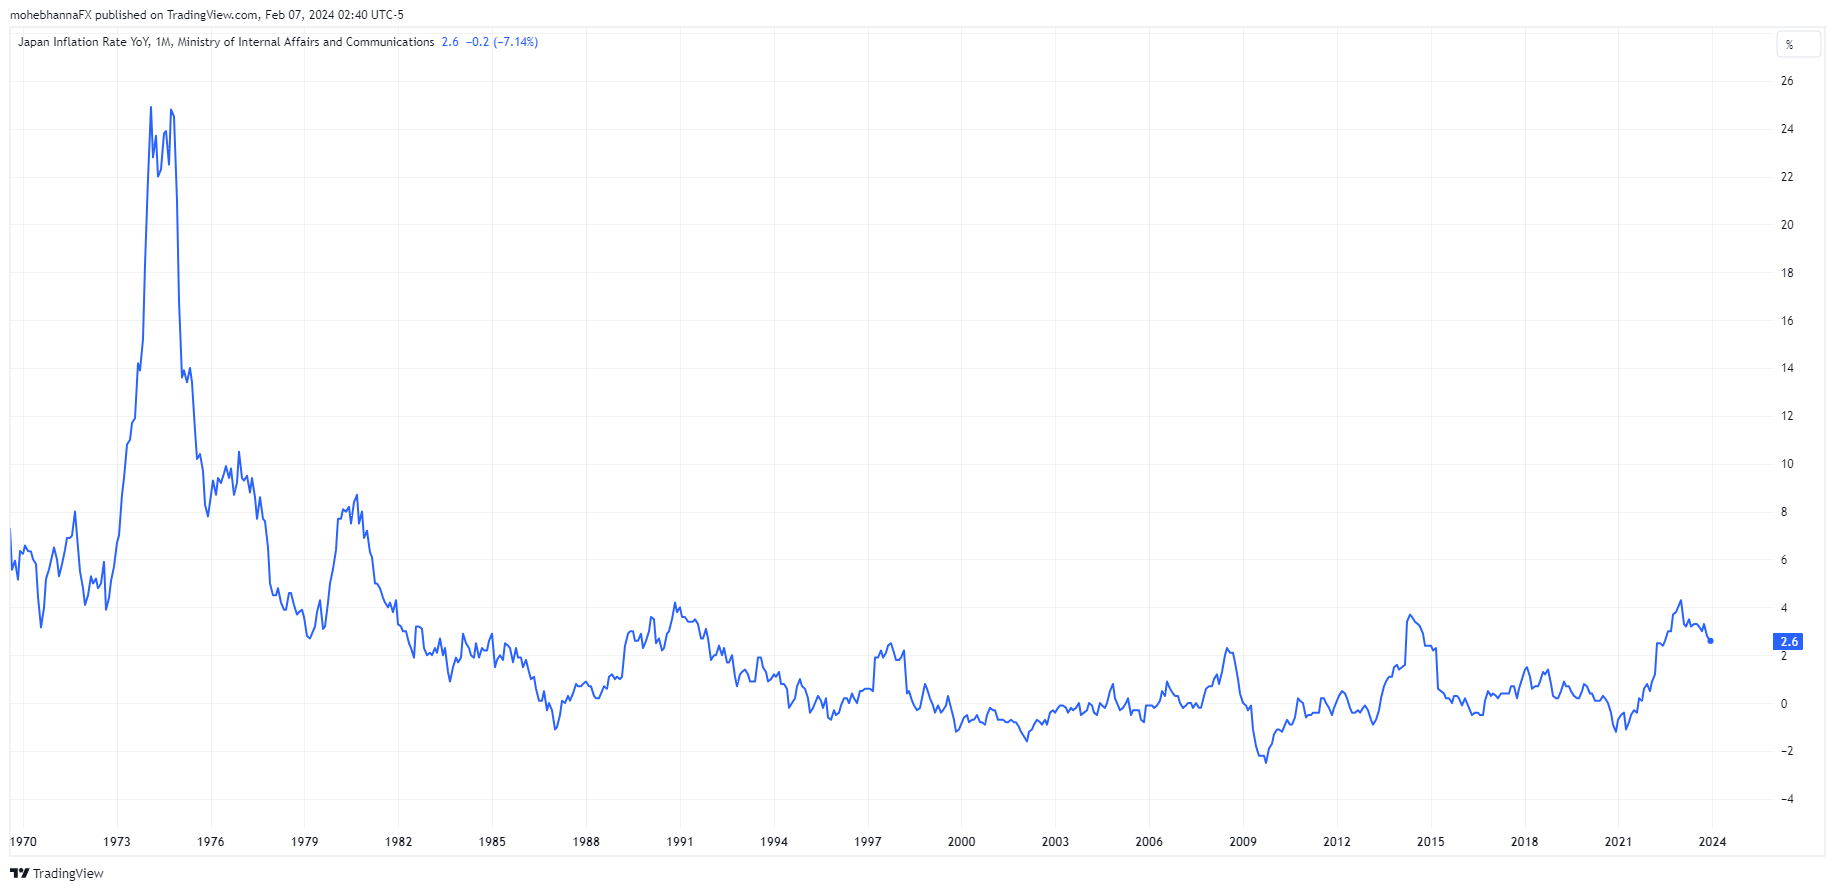 Japan Interest Rate YoY. Source: Oanda, TradingView.com, 07 Feb, 2024. Body image 1.